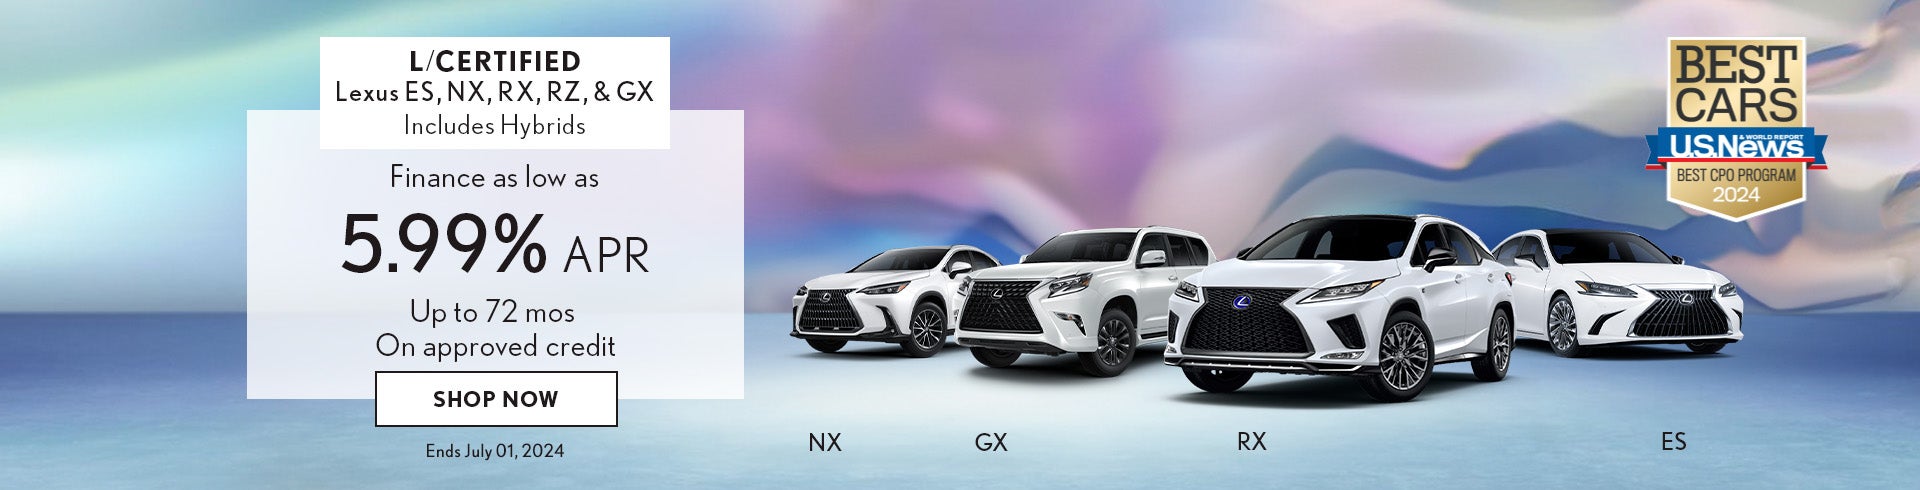 Finance a Certified Lexus ES, NX, RX, RZ & GX for 5.99%